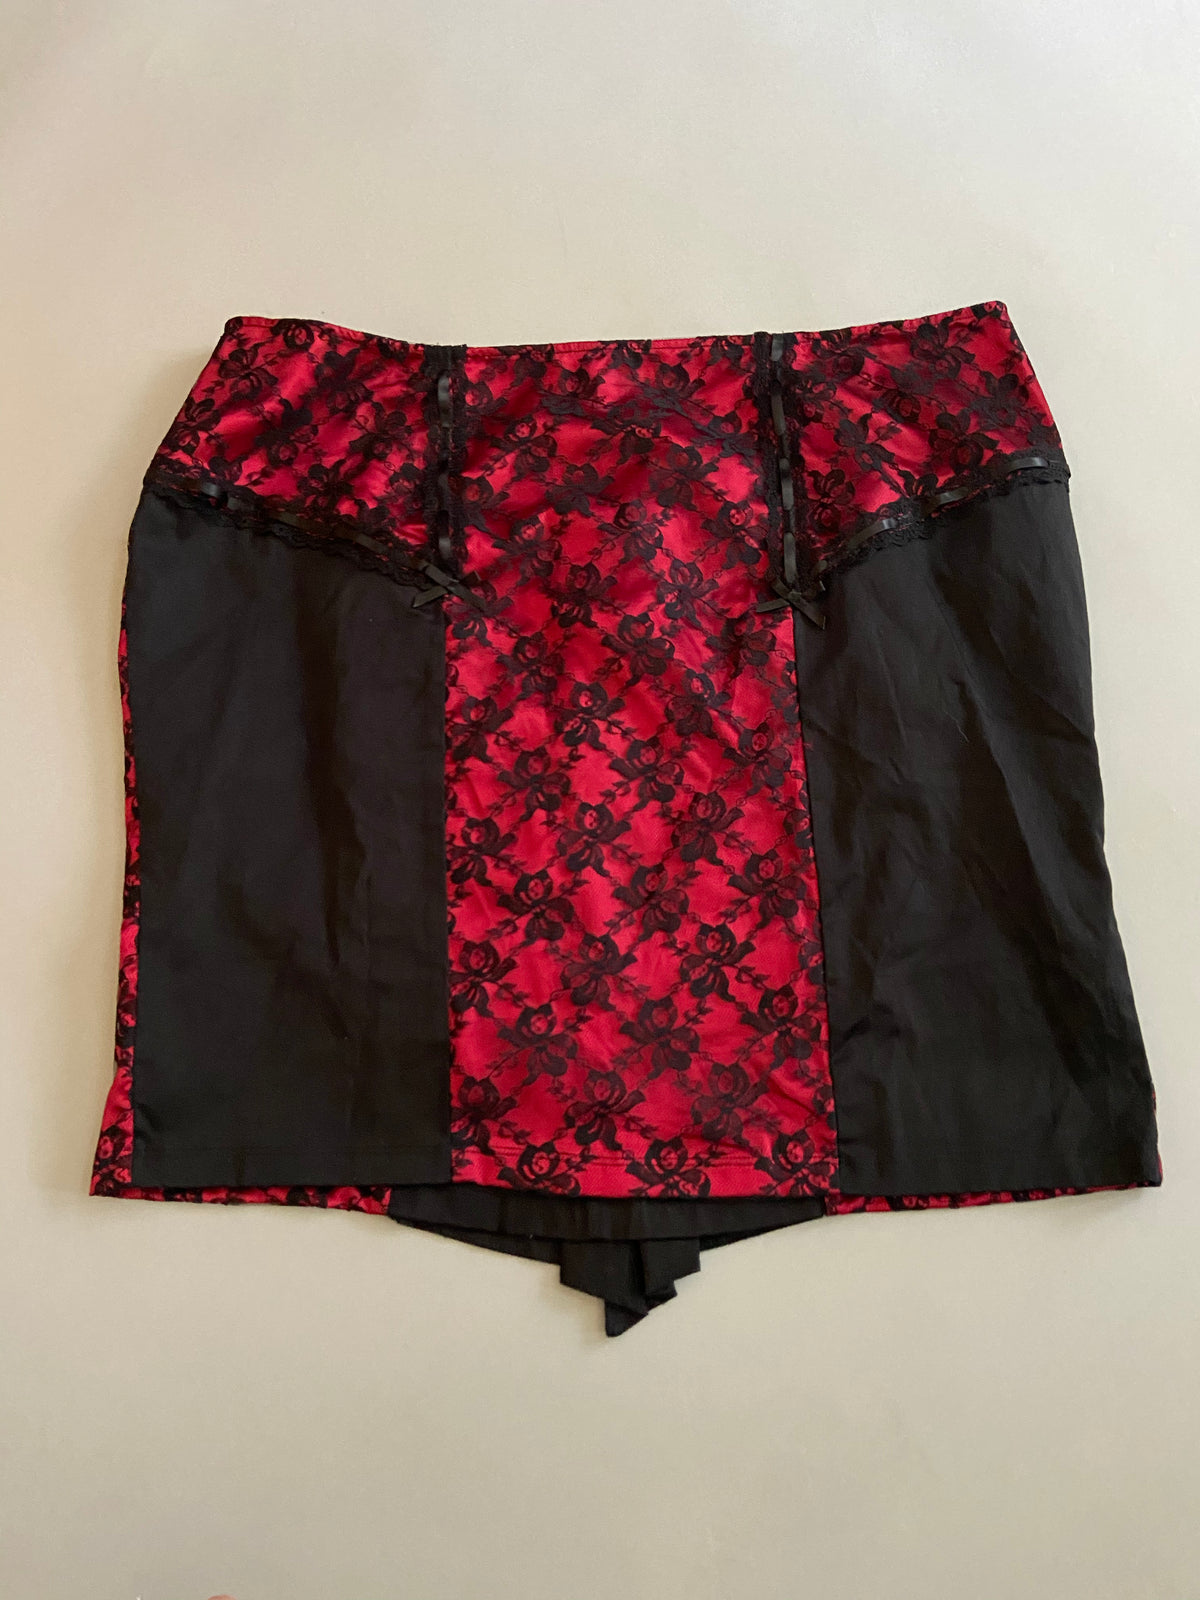 Vintage Lip Service for Torrid Red Satin & Black Lace pencil skirt-Skirt-Lip Service